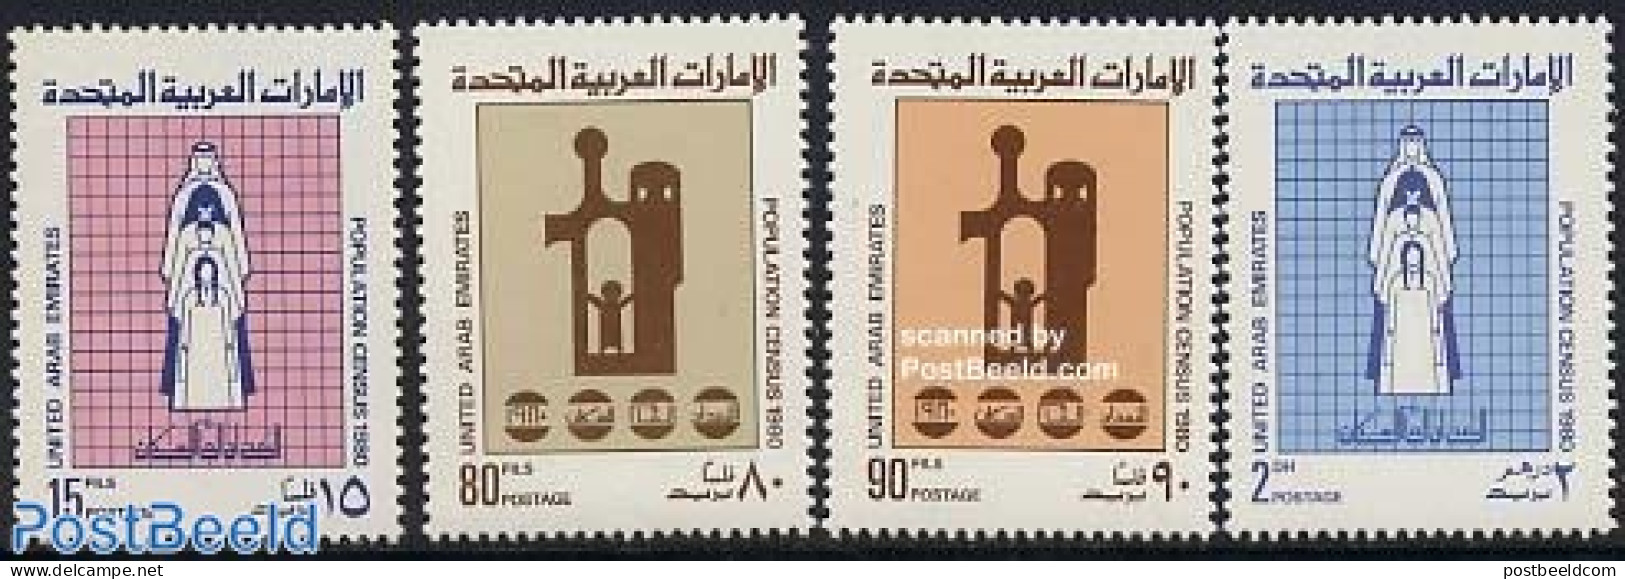 United Arab Emirates 1980 National Census 4v, Mint NH, Science - Statistics - Ohne Zuordnung